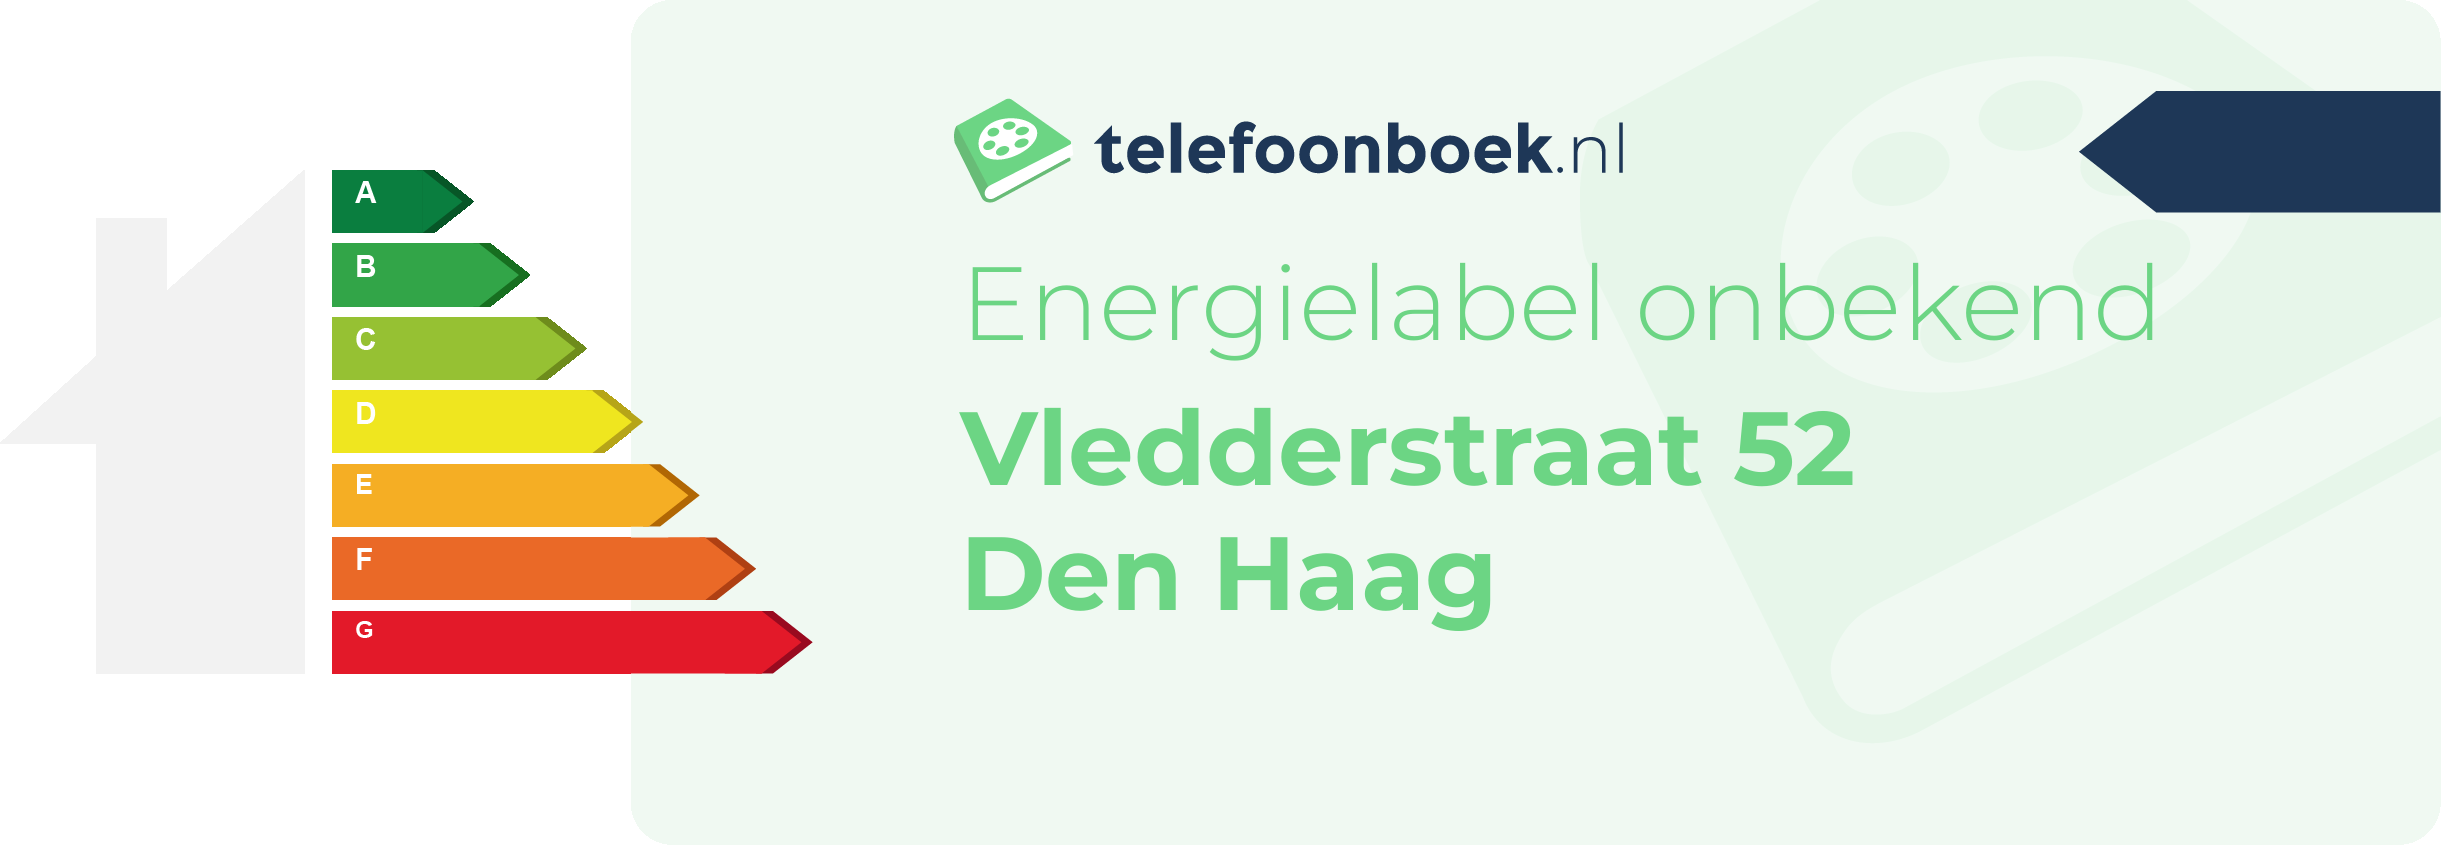 Energielabel Vledderstraat 52 Den Haag